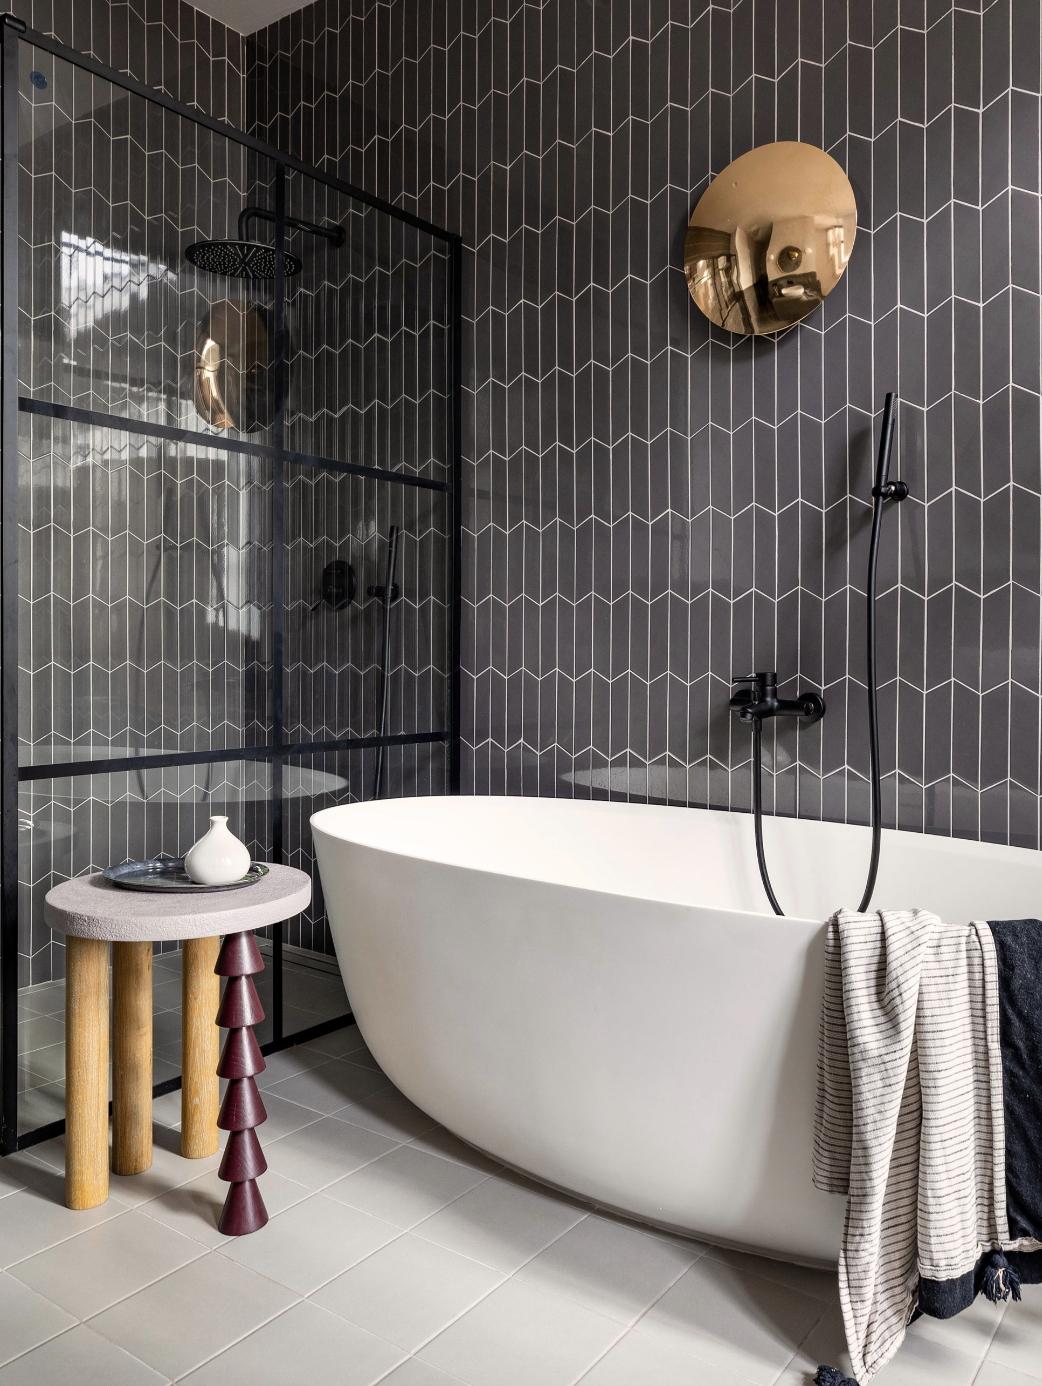 baño con bañera exenta en blanco y azulejos en morado oscuro